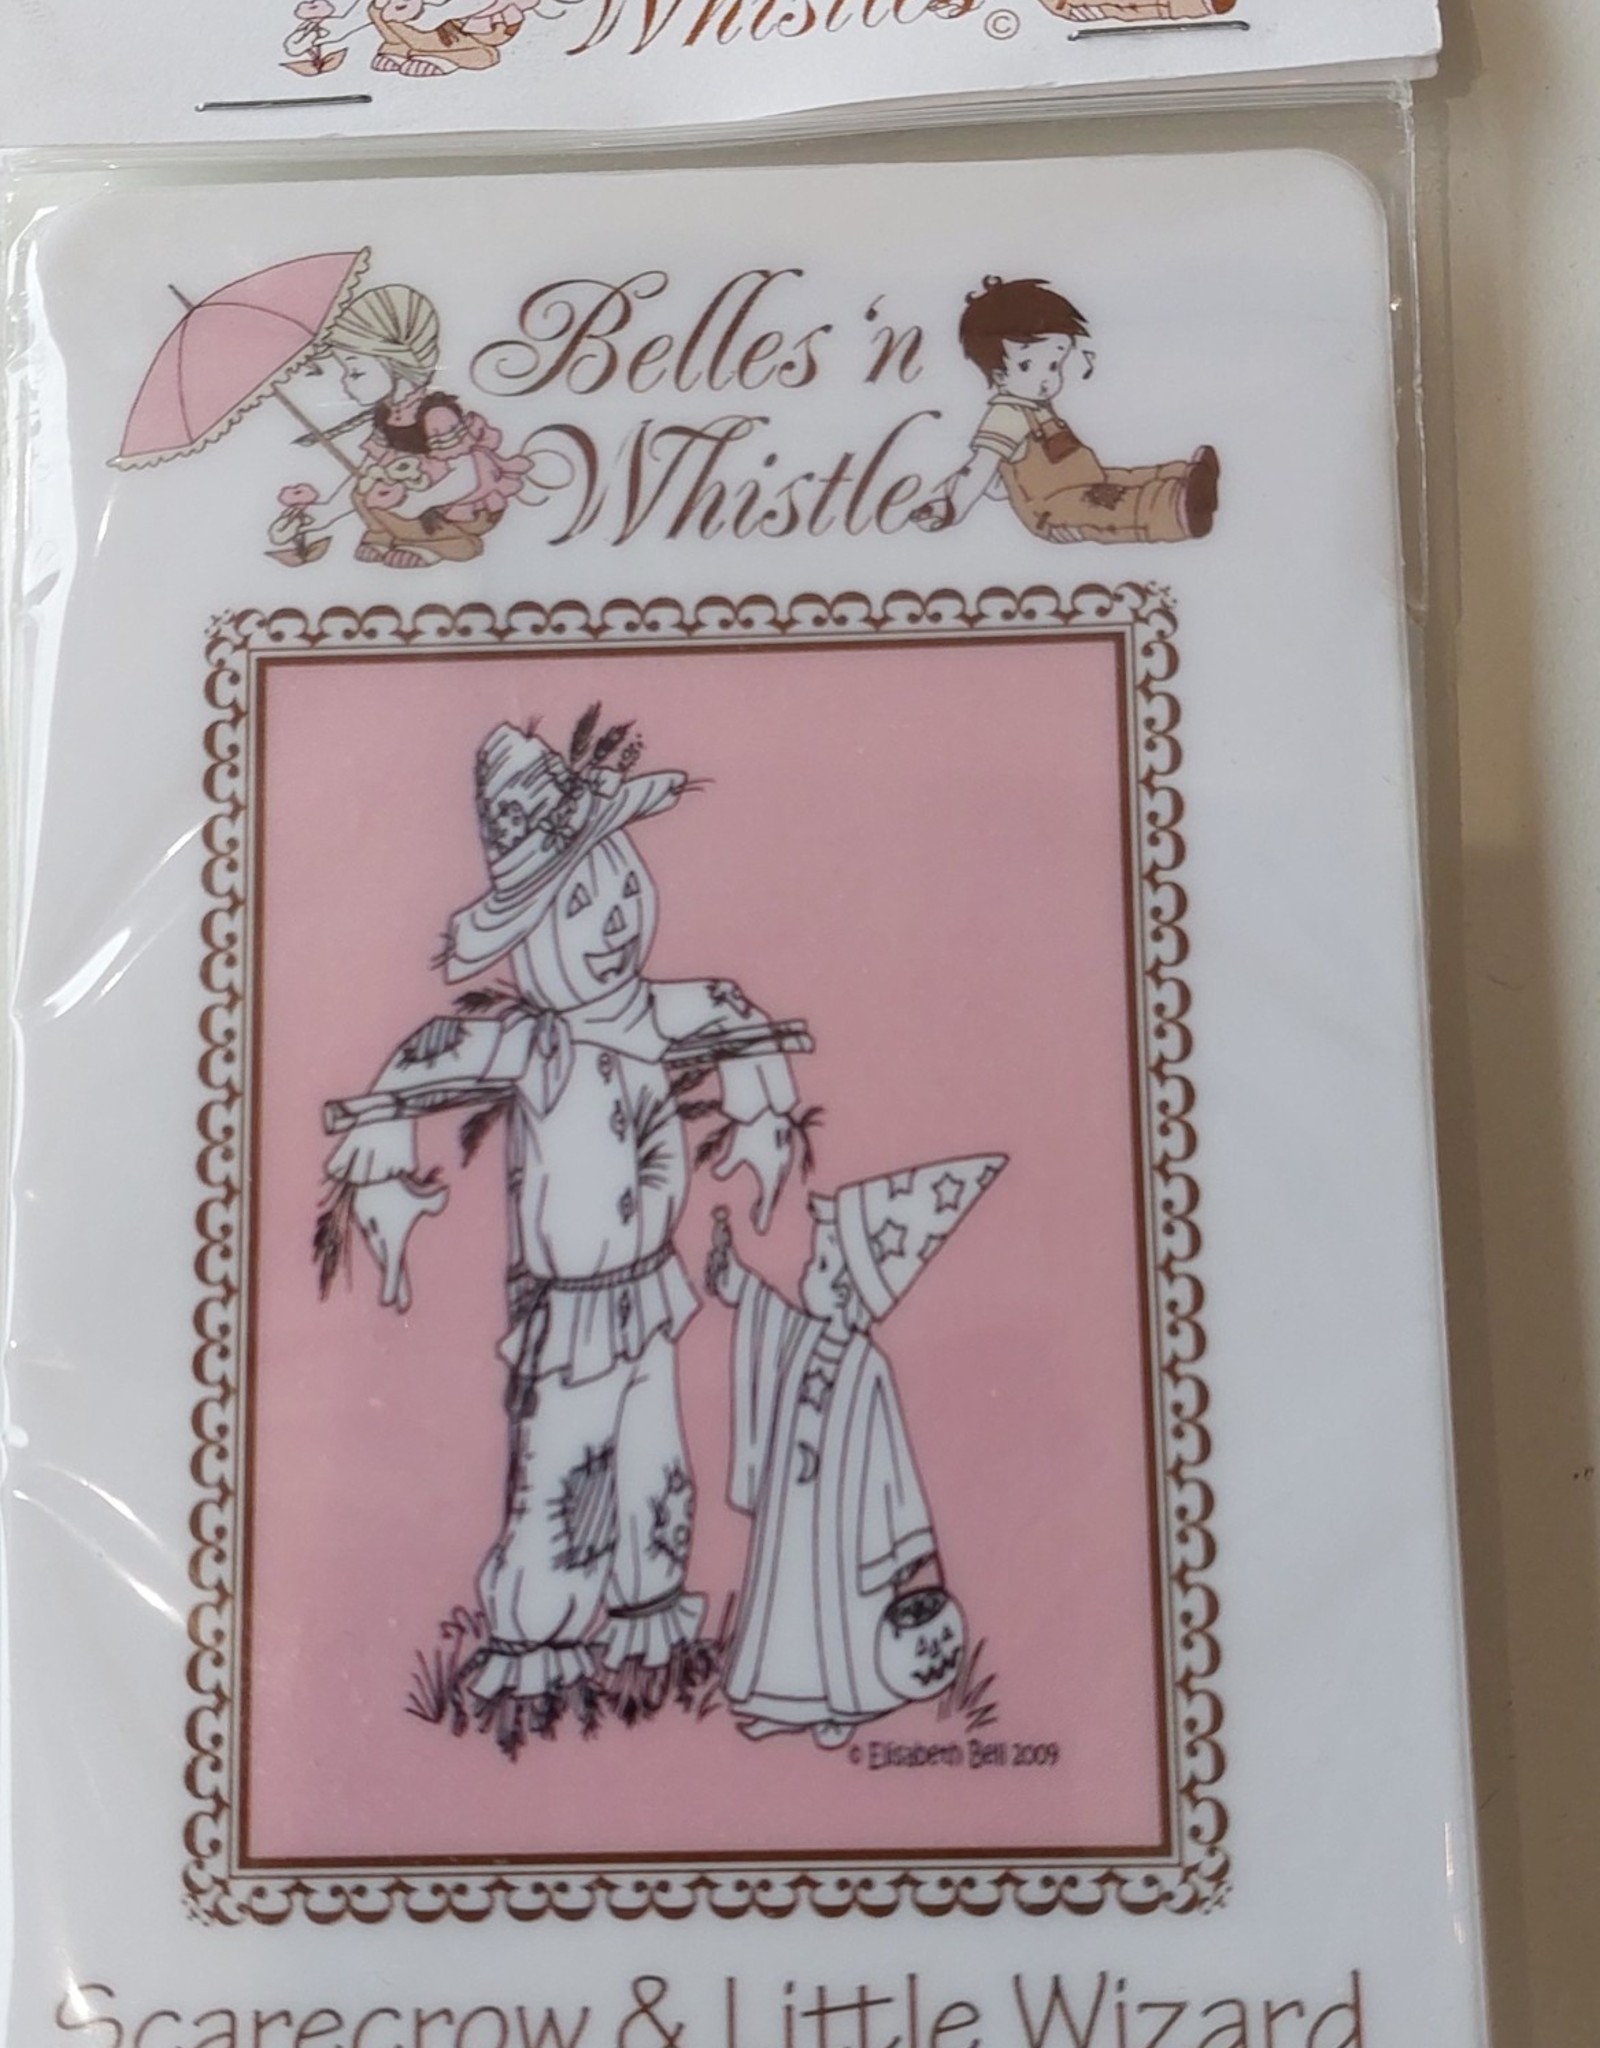 Belles 'n Whistless stamps Belles 'n Wisstles mounted Rrubberstamp Scarecrow & Little Wizzard B04